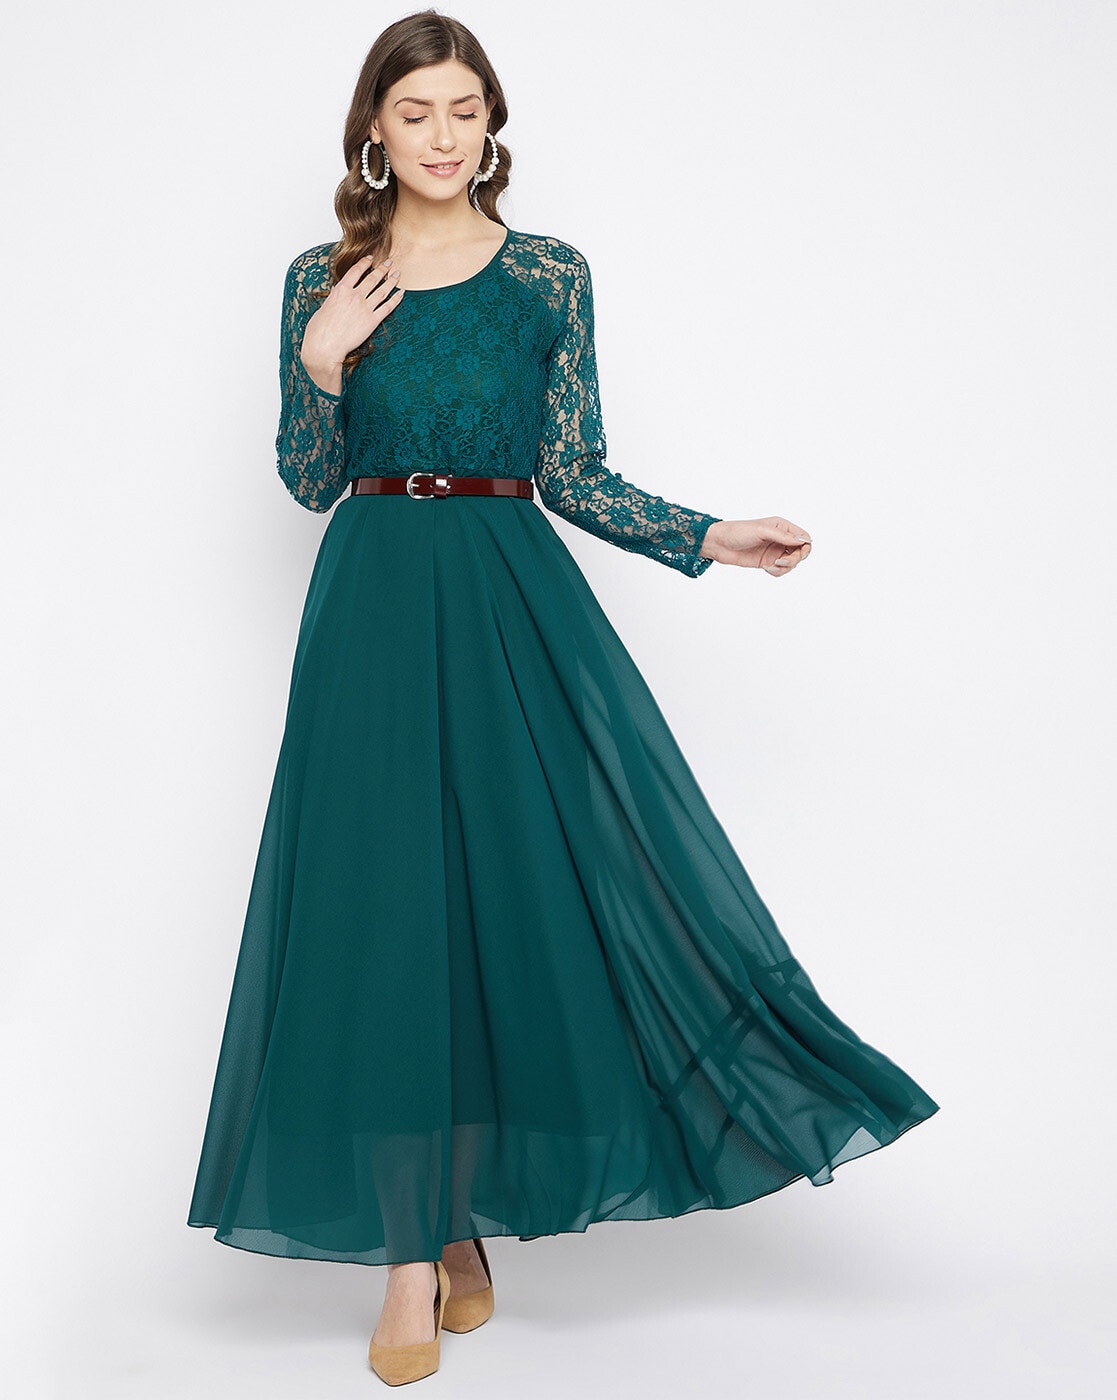 Buy Teal Printed Dress Online - RK India Store View